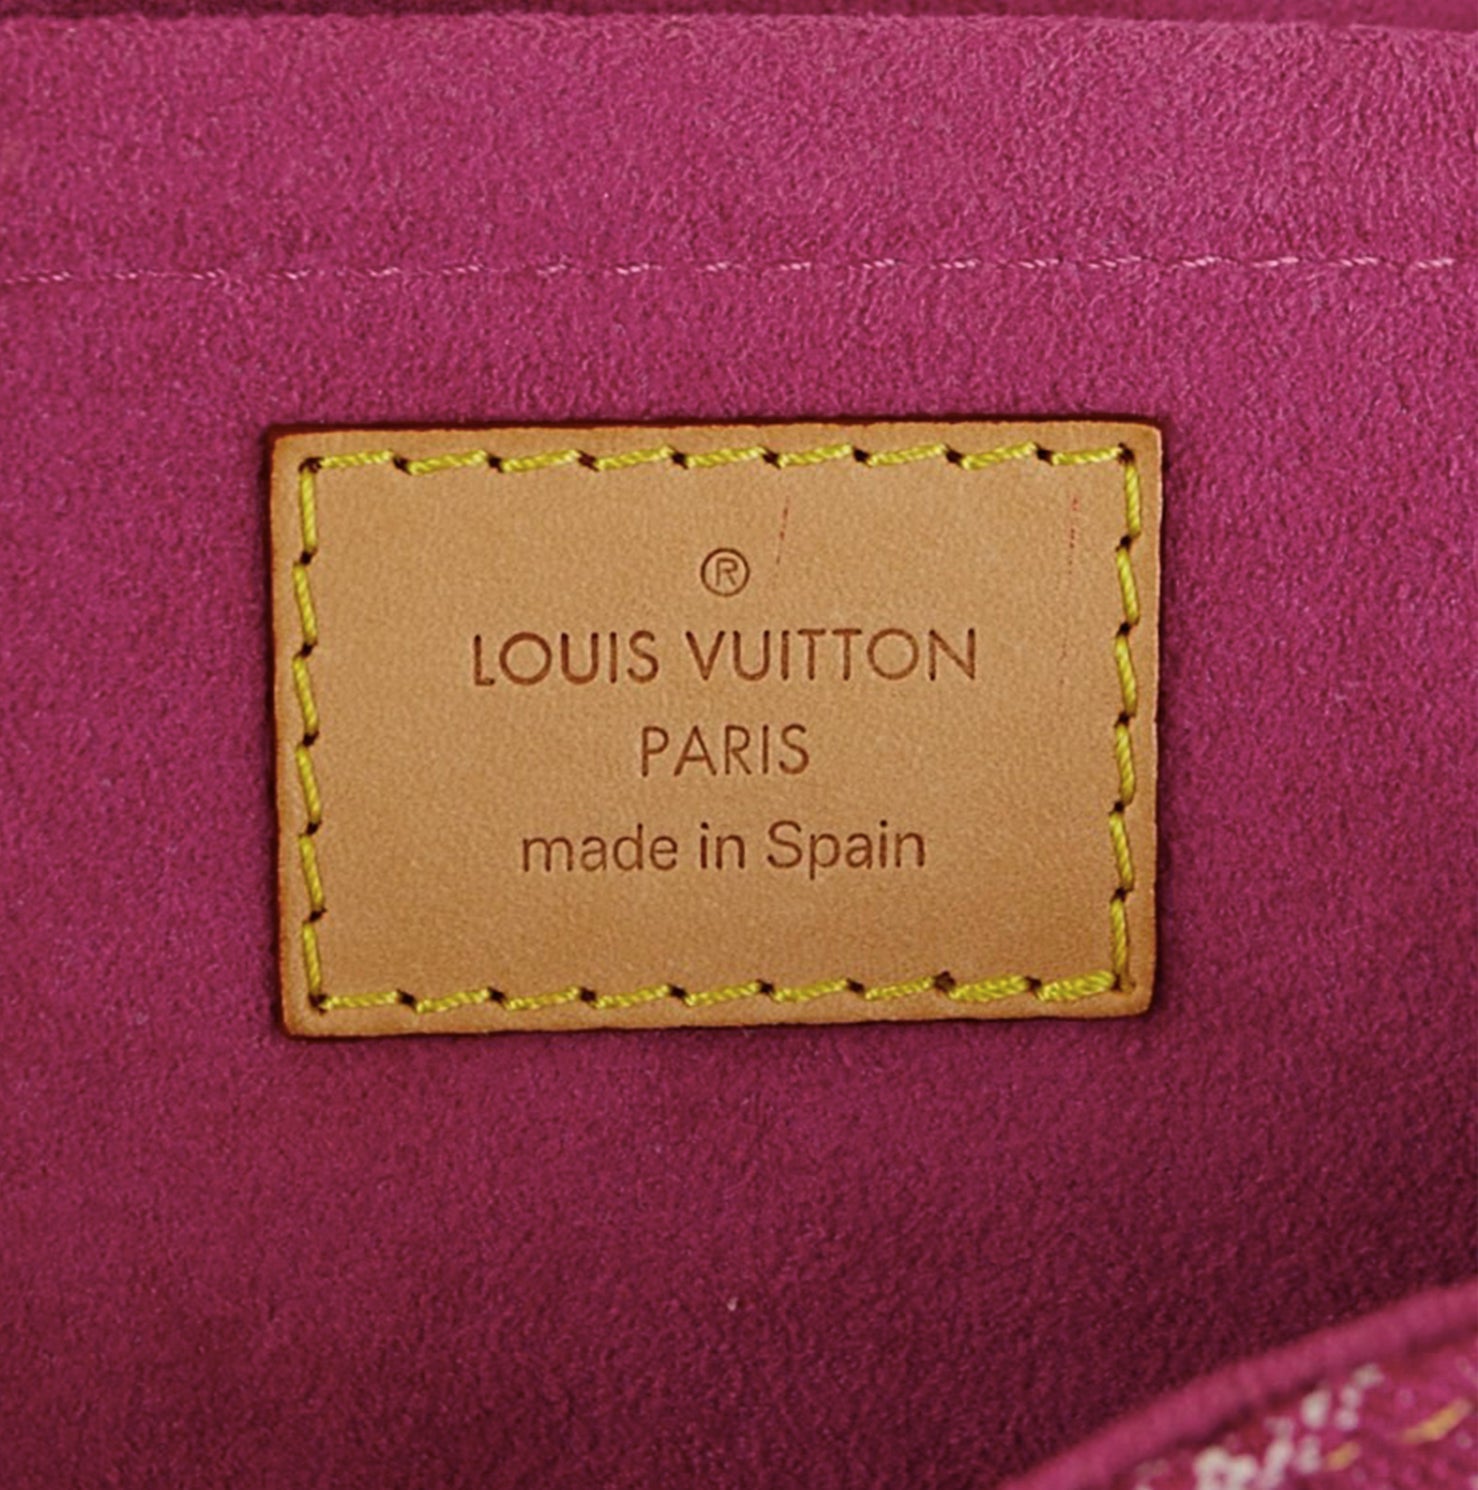 An Exclusive Look at Louis Vuitton's Pink Monogram Denim Footwear